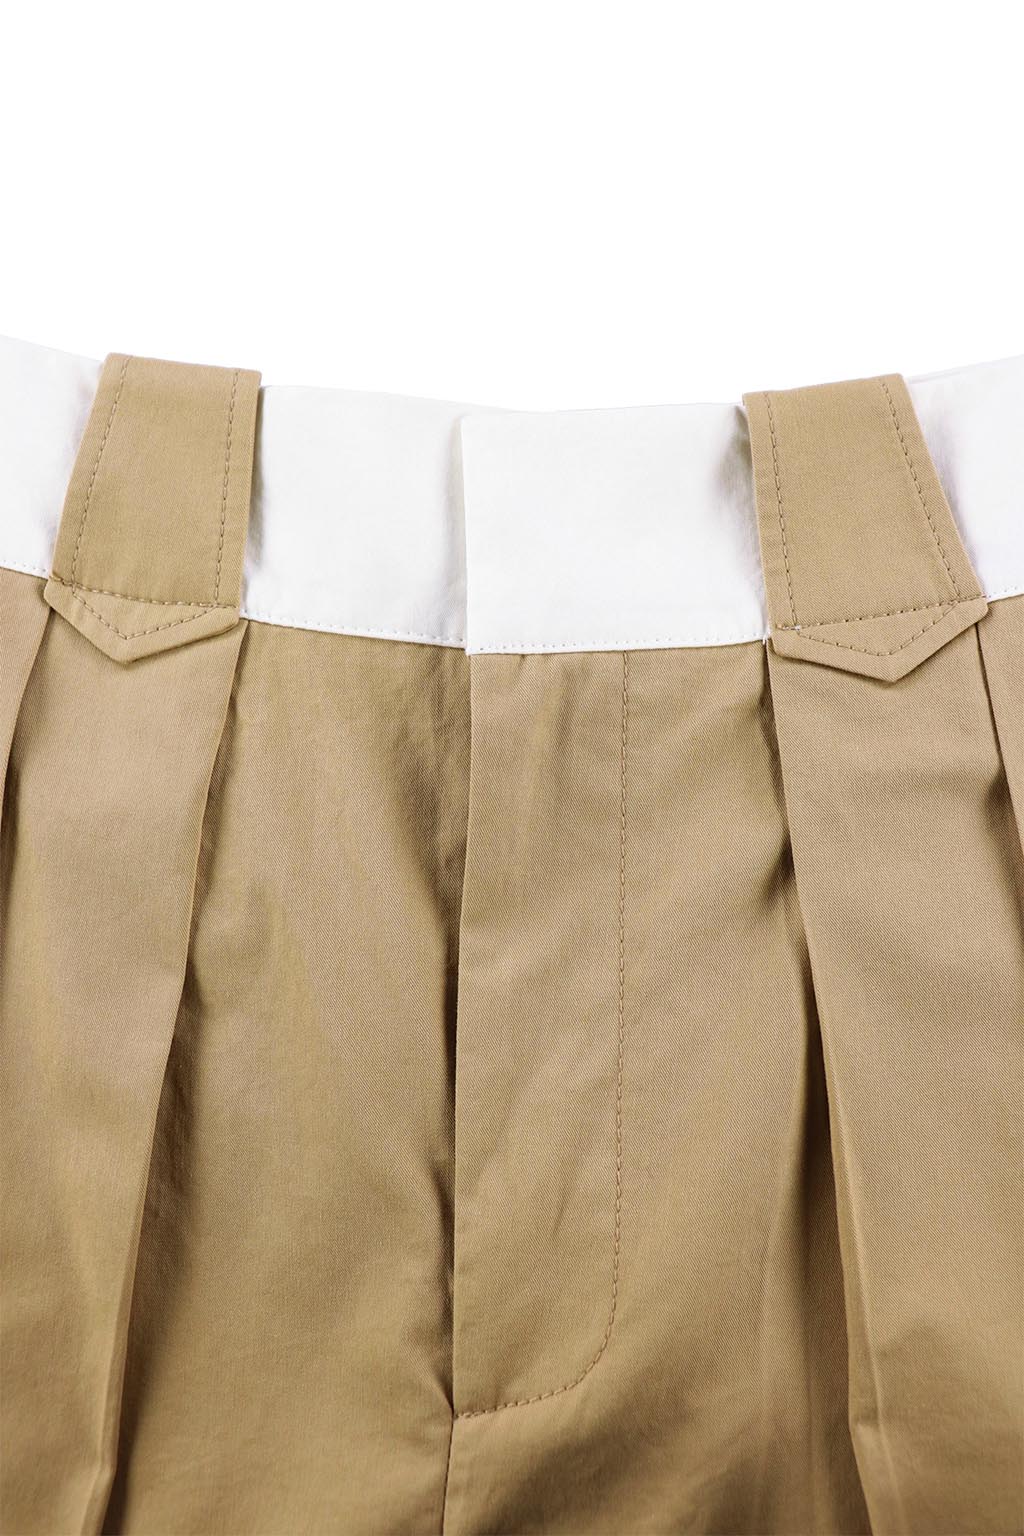 Contrast Belt Tuck Pants - ALEXIA STAM